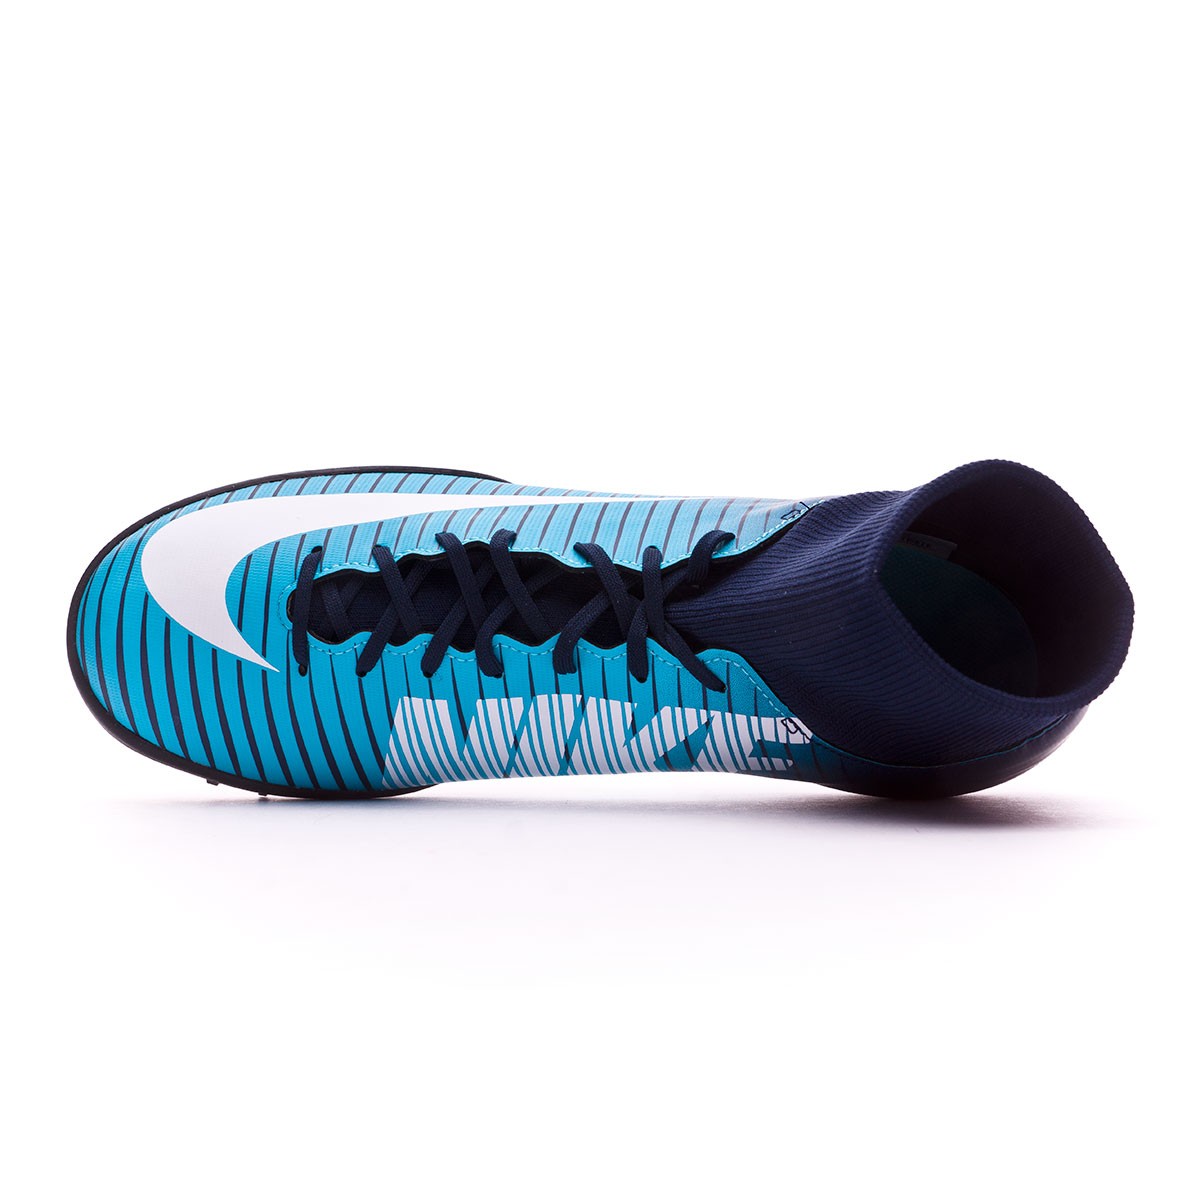 Nike hypervenom football boots Football Equipment for Sale